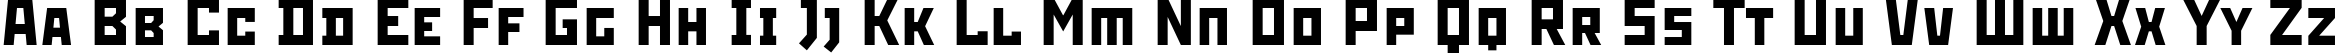 Пример написания английского алфавита шрифтом RodchenkoC